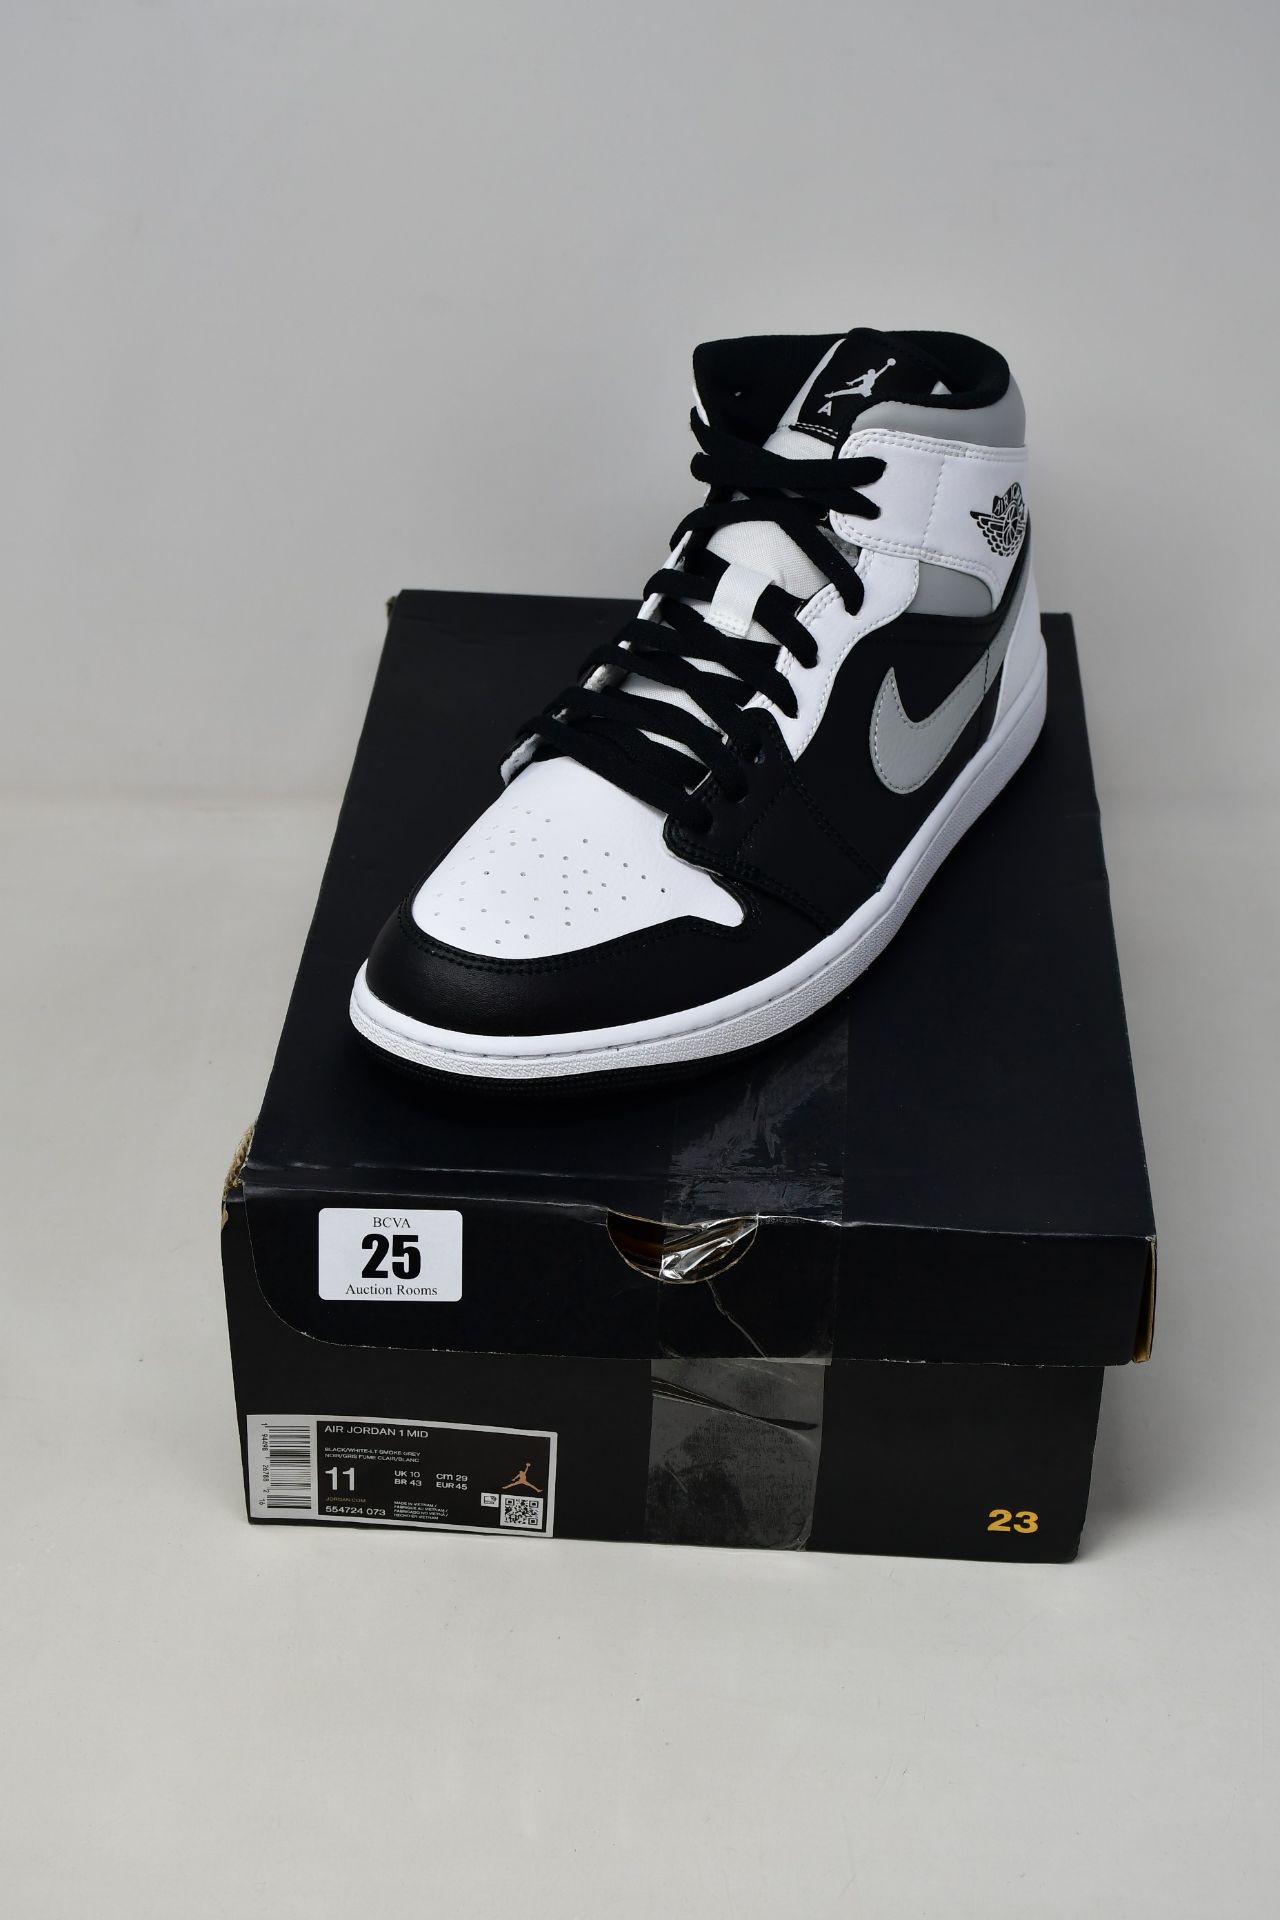 A pair of as new Nike Air Jordan 1 Mid sneakers (UK 10).